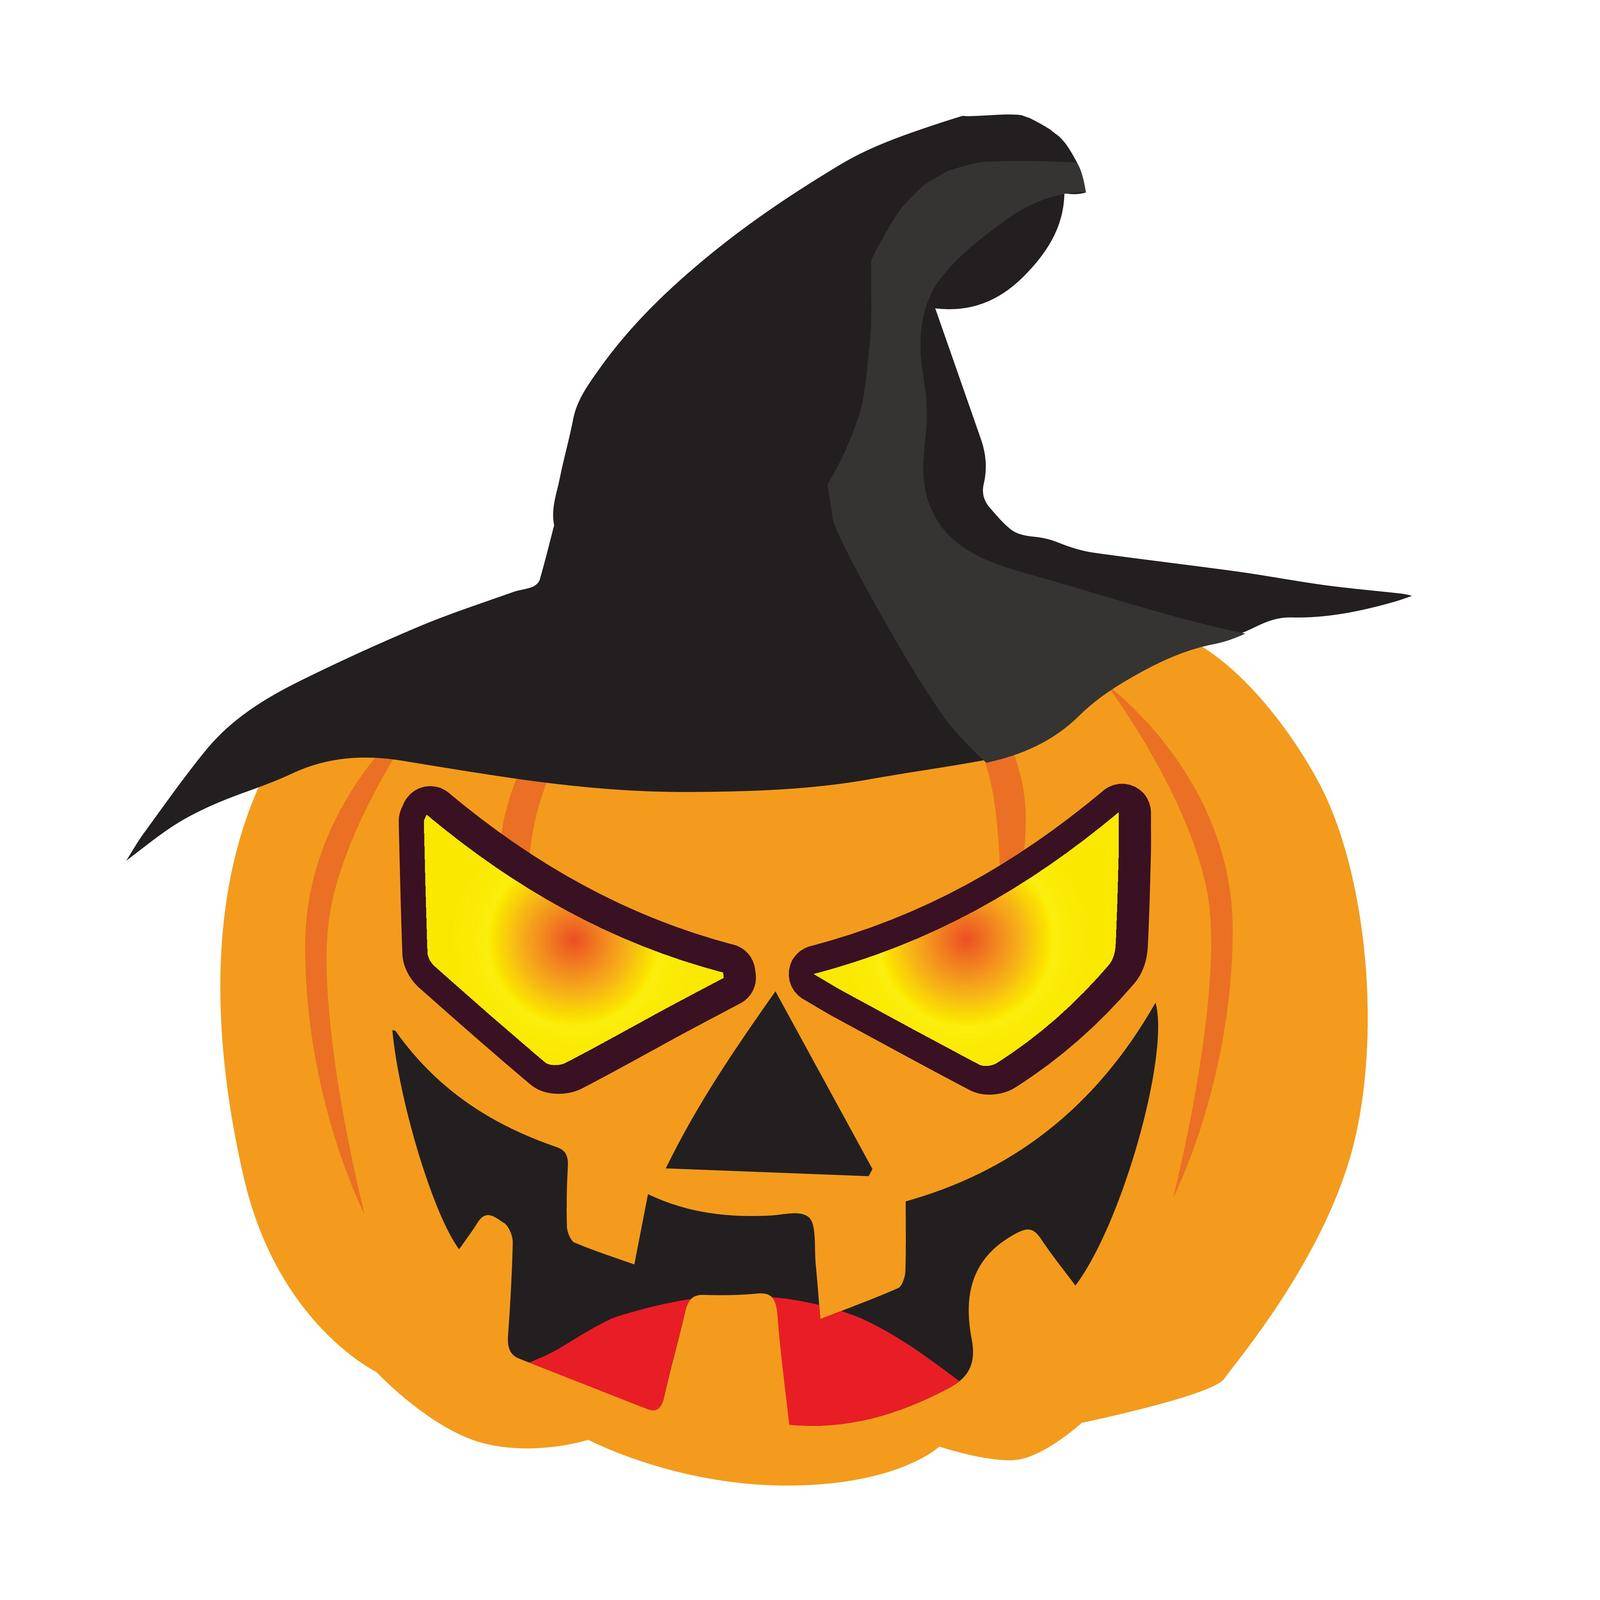 Halloween spooky elements. Cartoon halloween spooky evil silhouettes by Photographeeasia